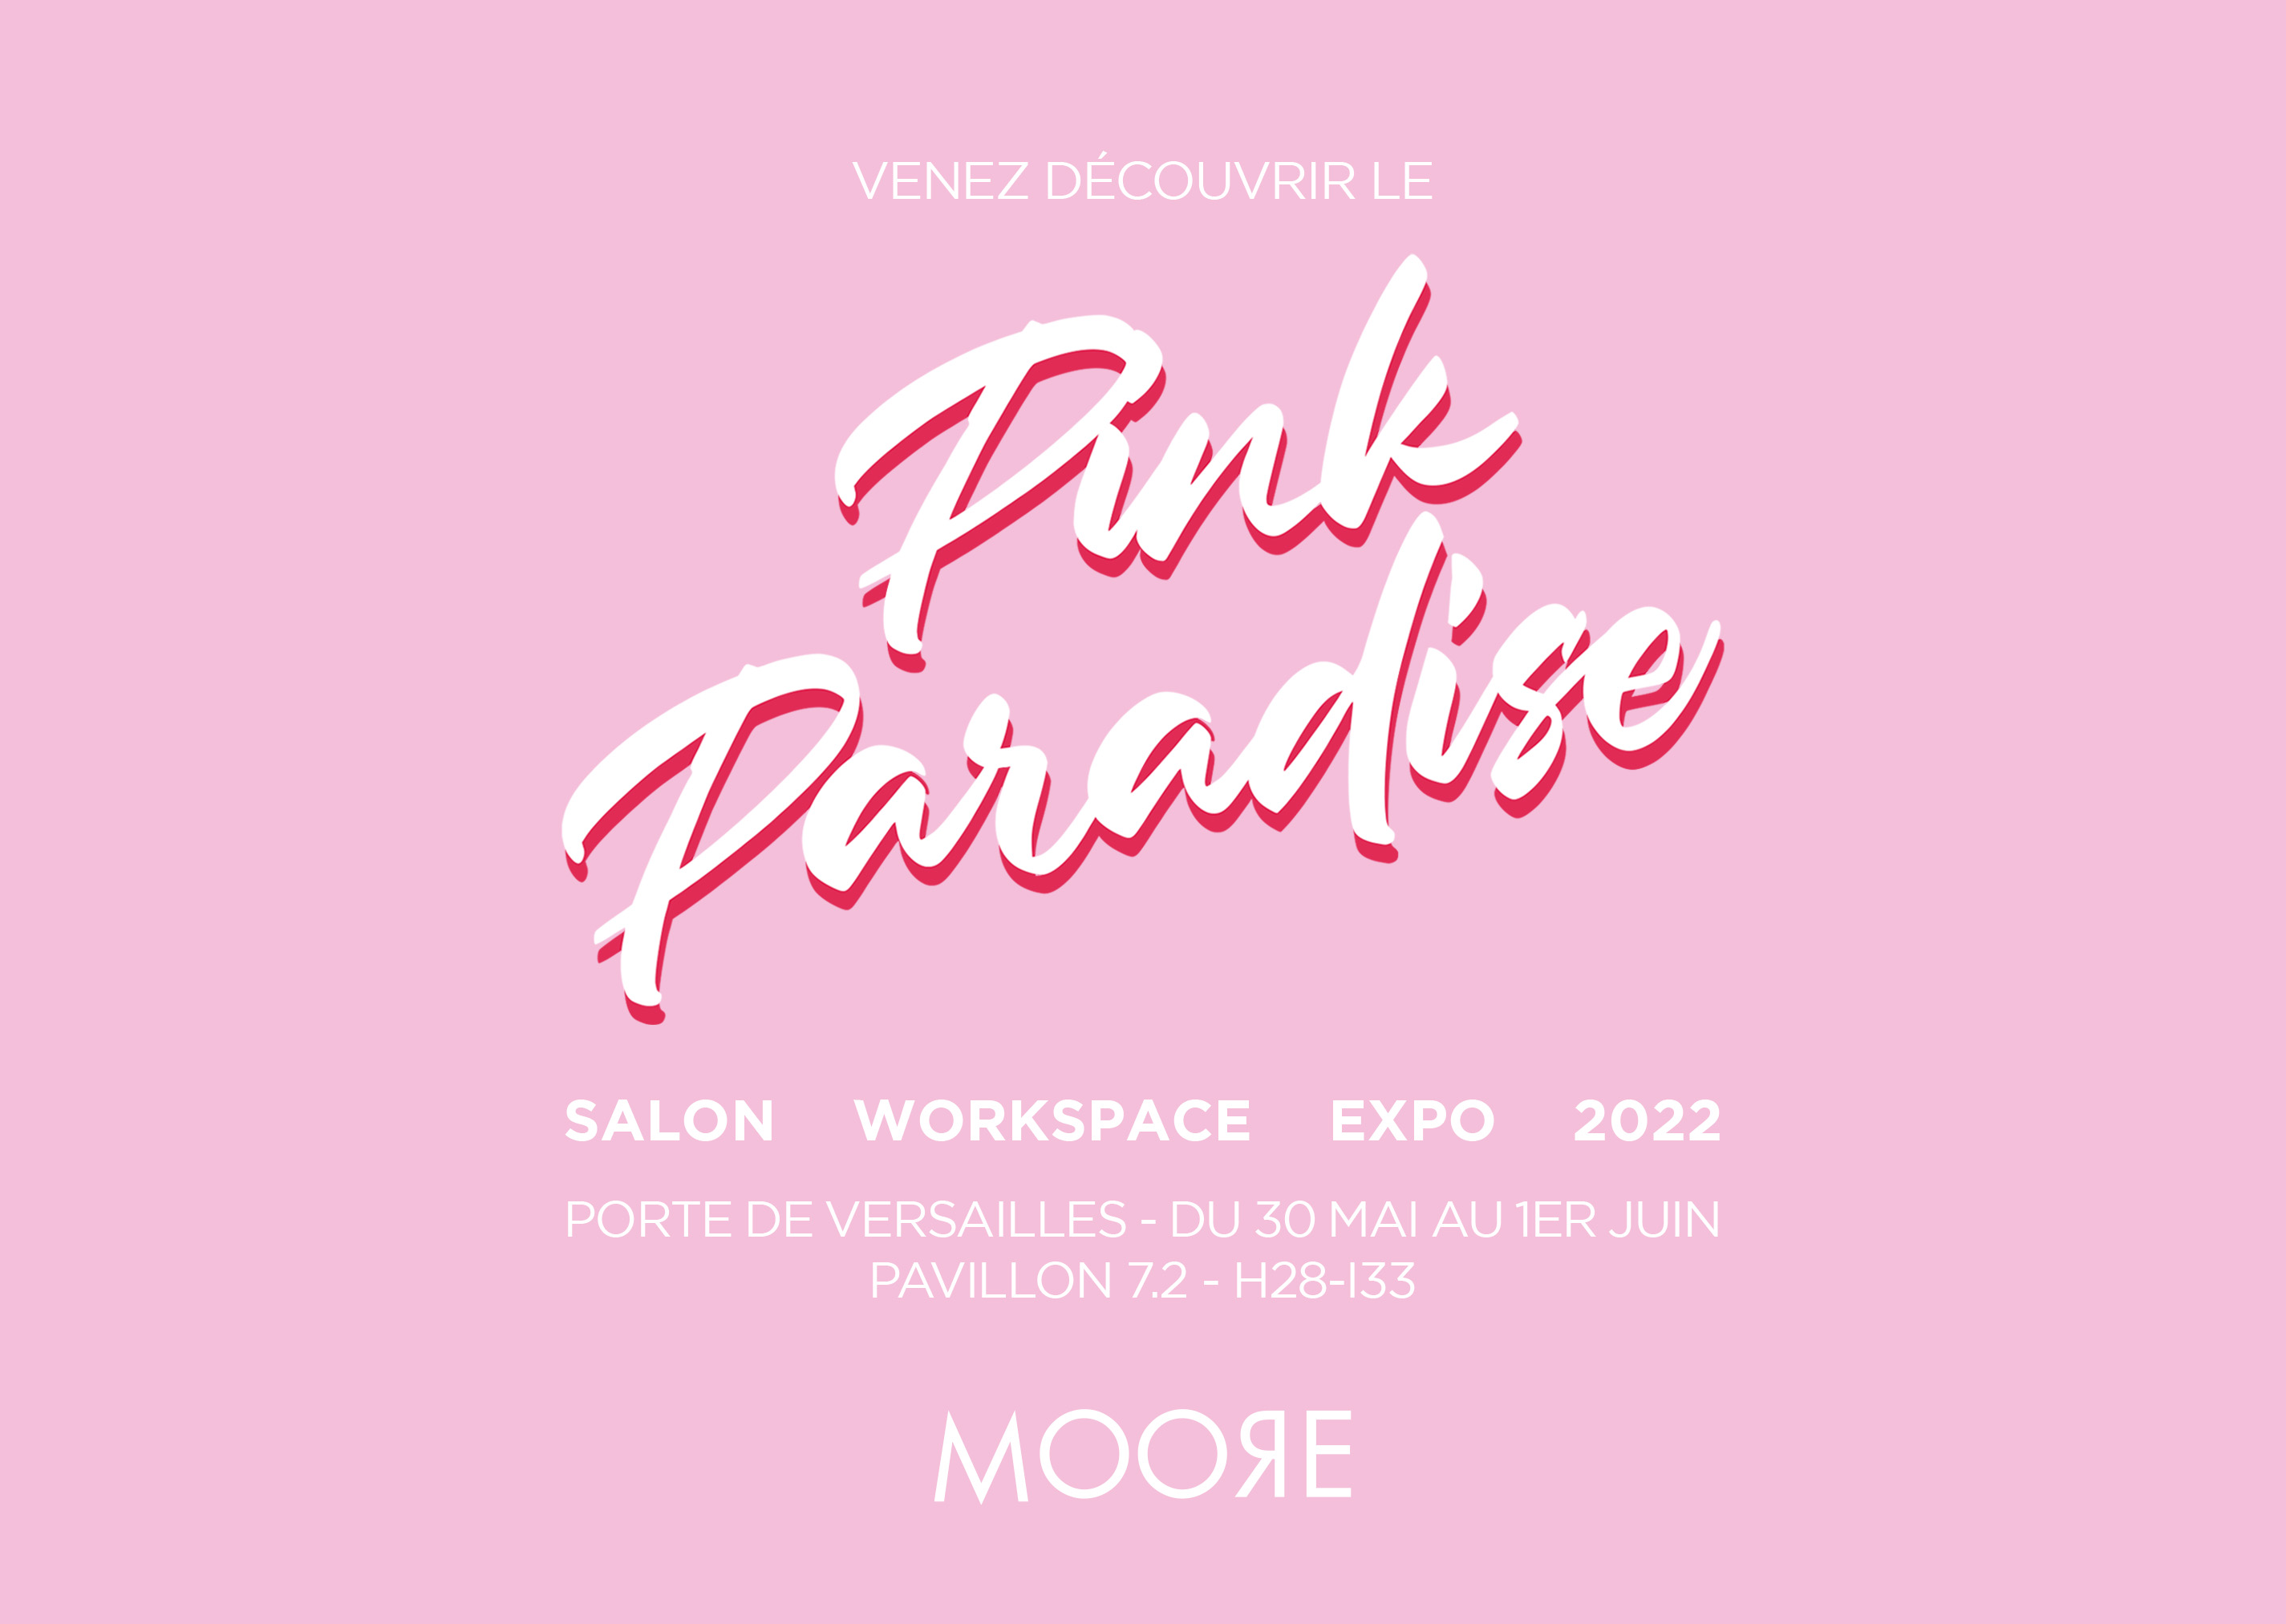 MOORE DESIGN WORKSPACE EXPO 2022